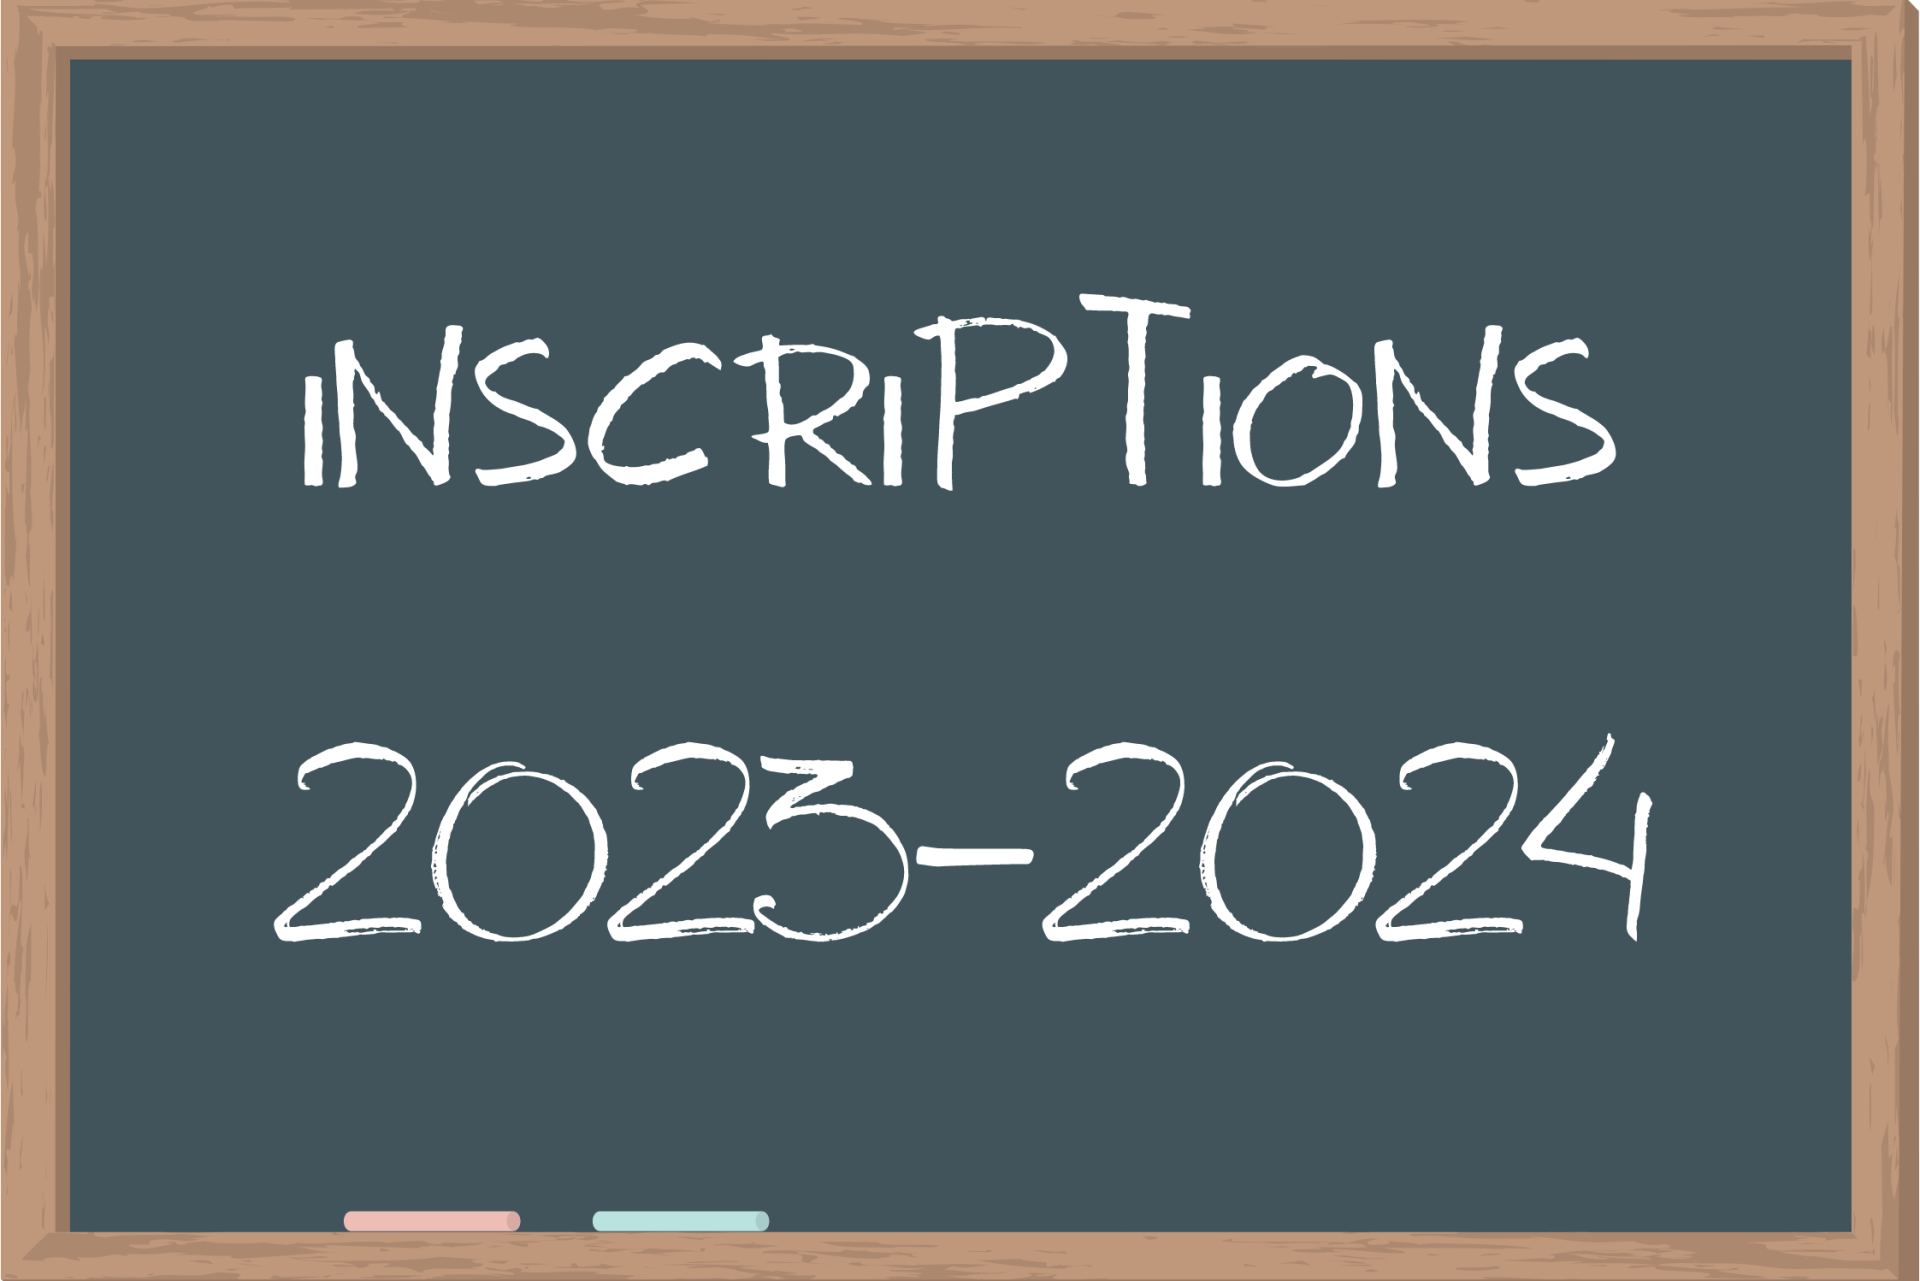 Inscriptions 2023 2024